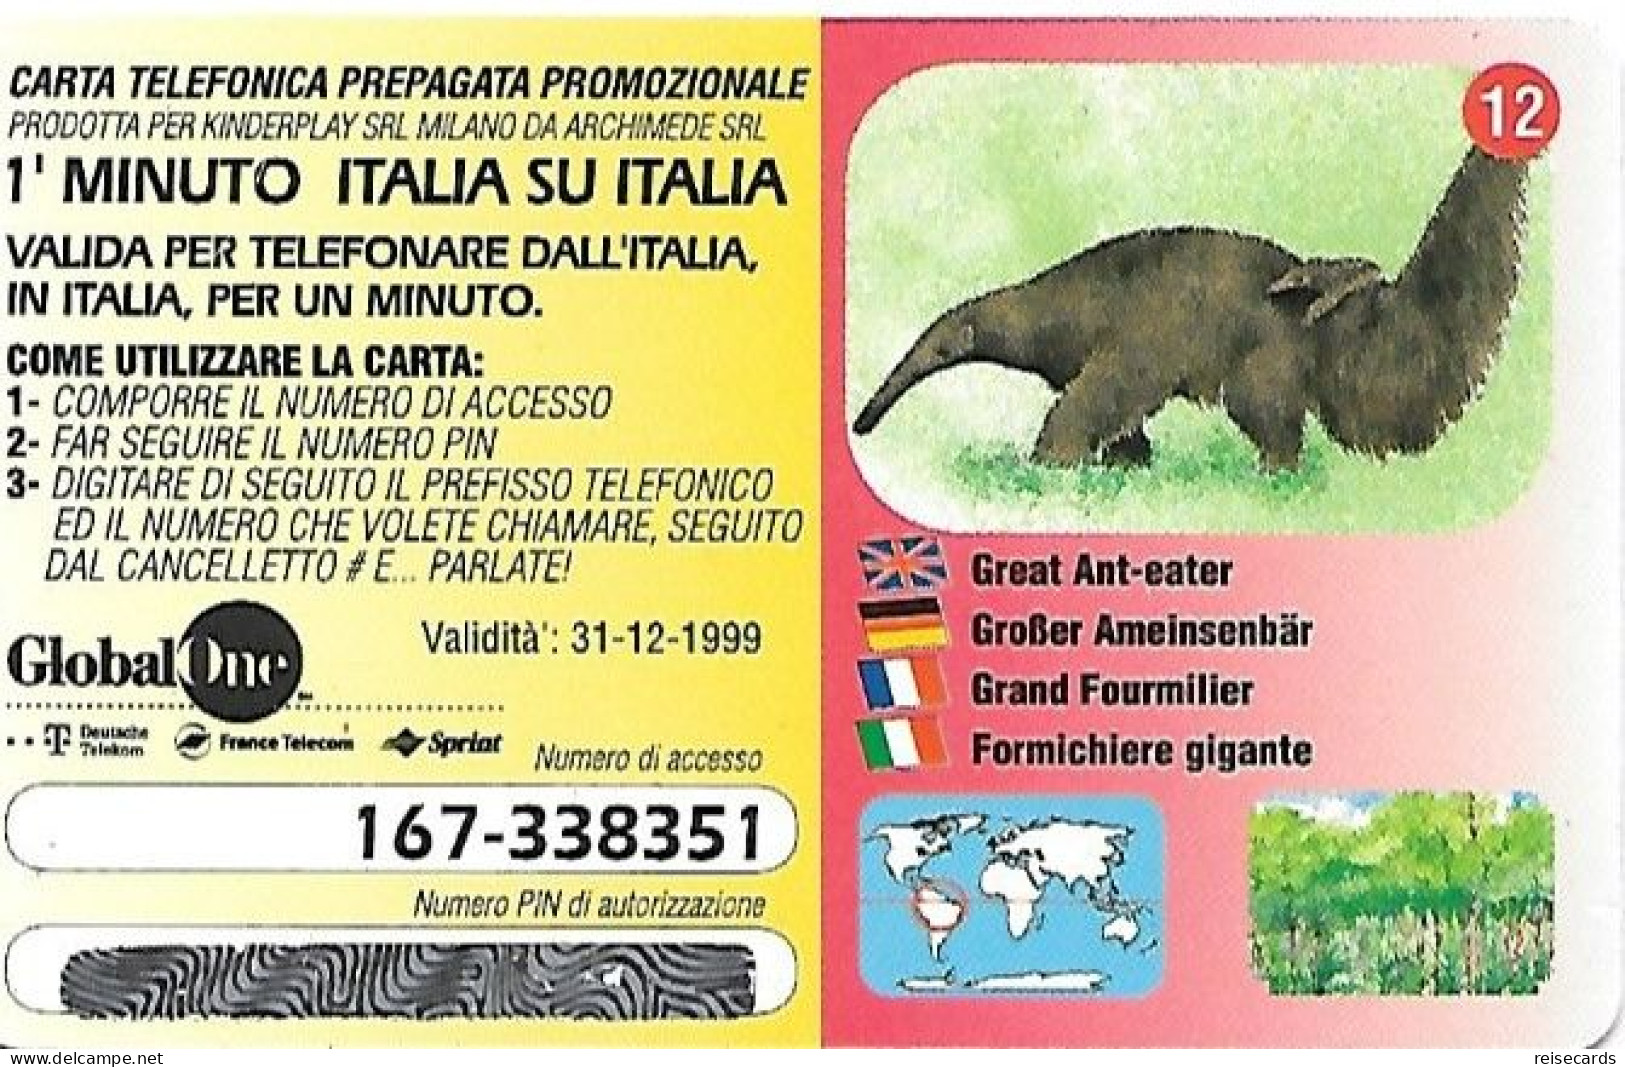 Italy: Prepaid GlobalOne - Save The Planet 12, Grosser Ameisenbär - Cartes GSM Prépayées & Recharges